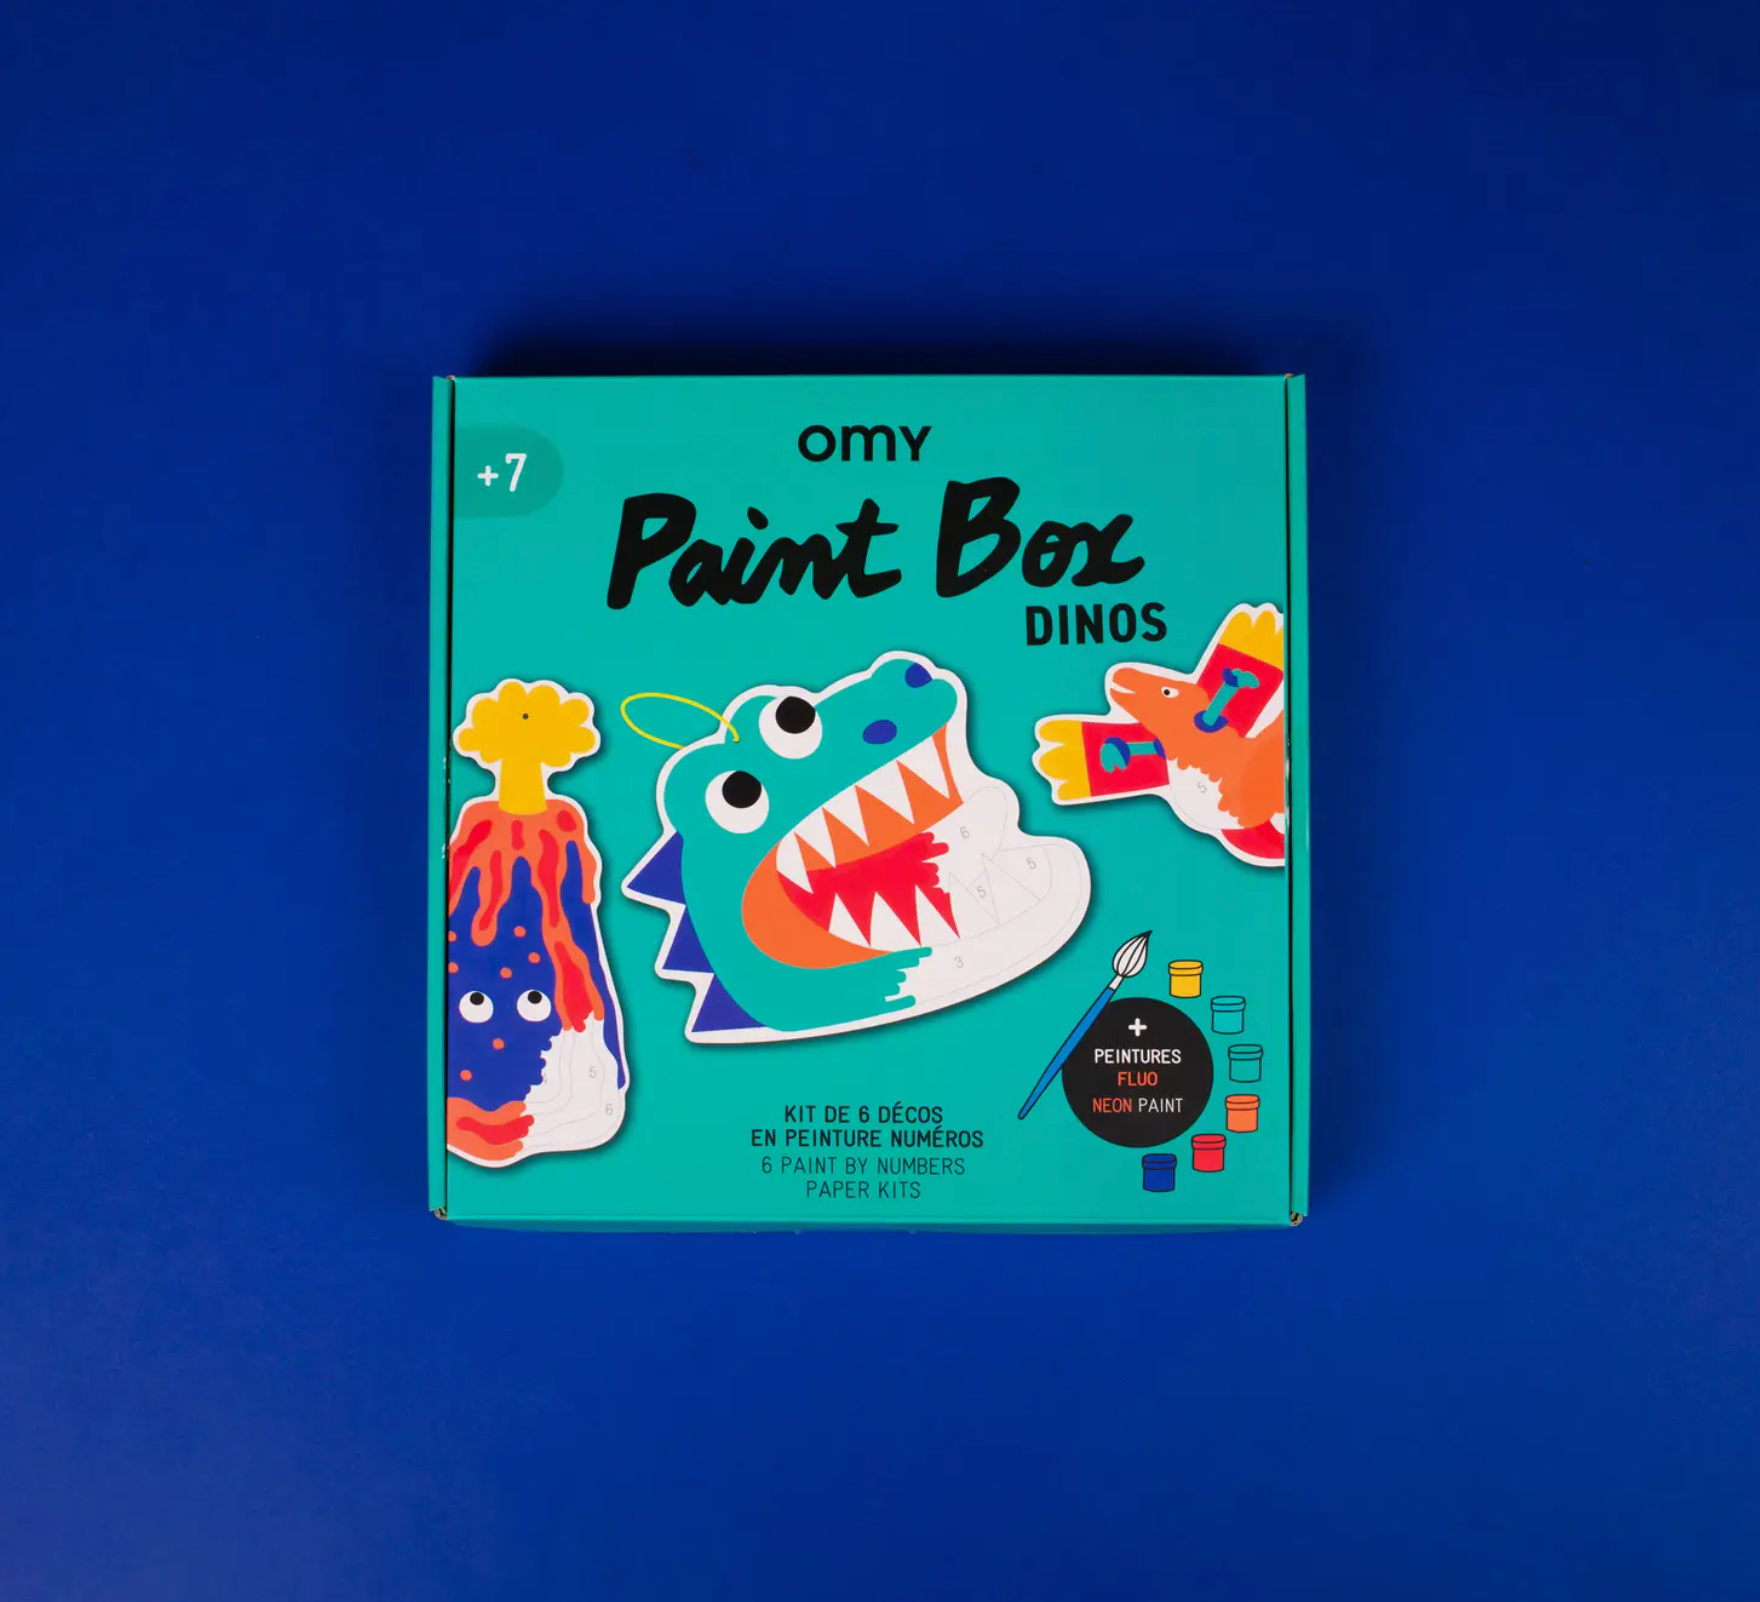 Artist's Paint Box Kit